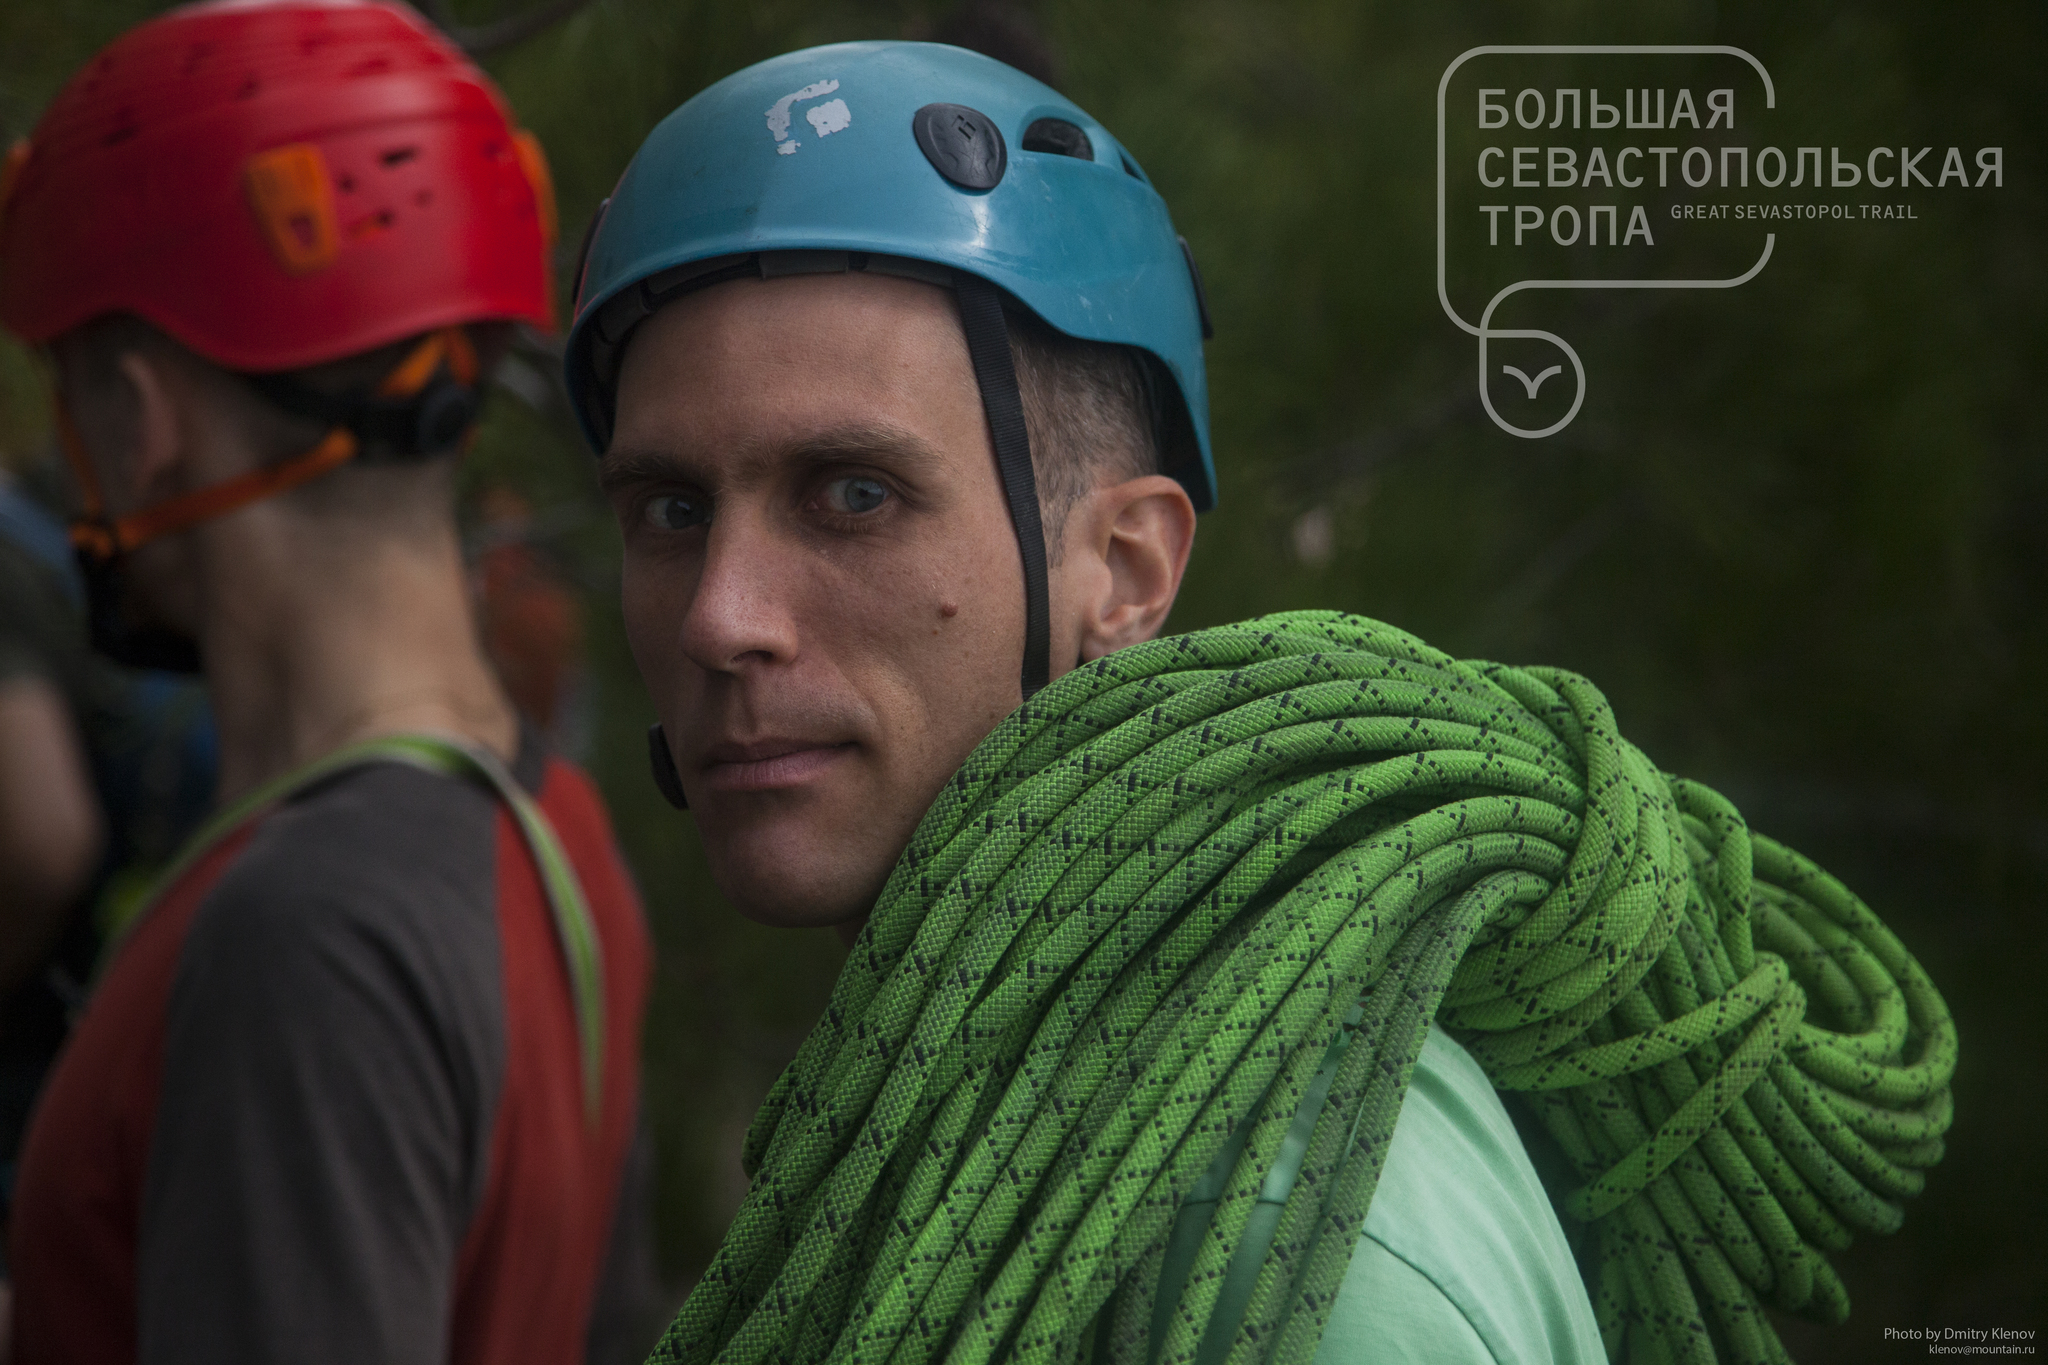 Festival Great Sevastopol Trail 2019. How it was. Part II - My, The festival, The mountains, The rocks, Rescuers, Mountaineering, Speleology, Rock climbing, Crimea, Video, Longpost